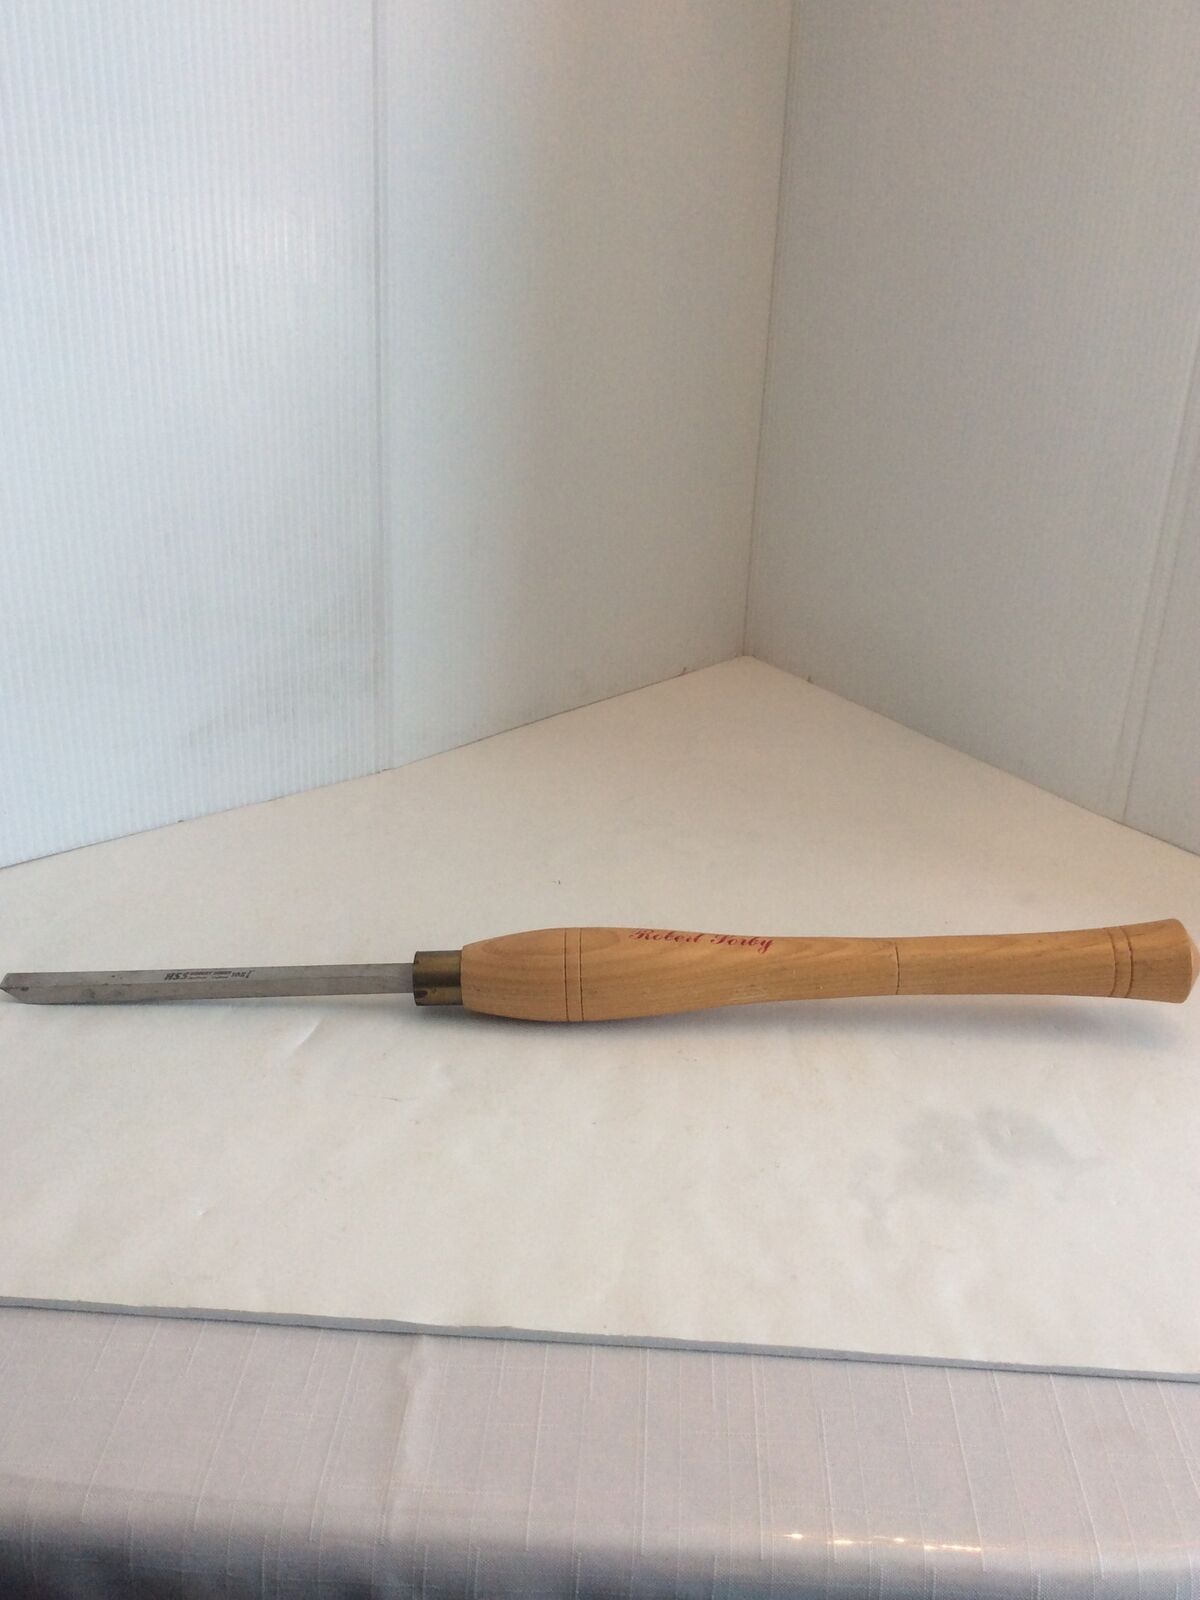 Robert Sorby Bedan Tool Hss 10mm 3/8” Woodworking Tool